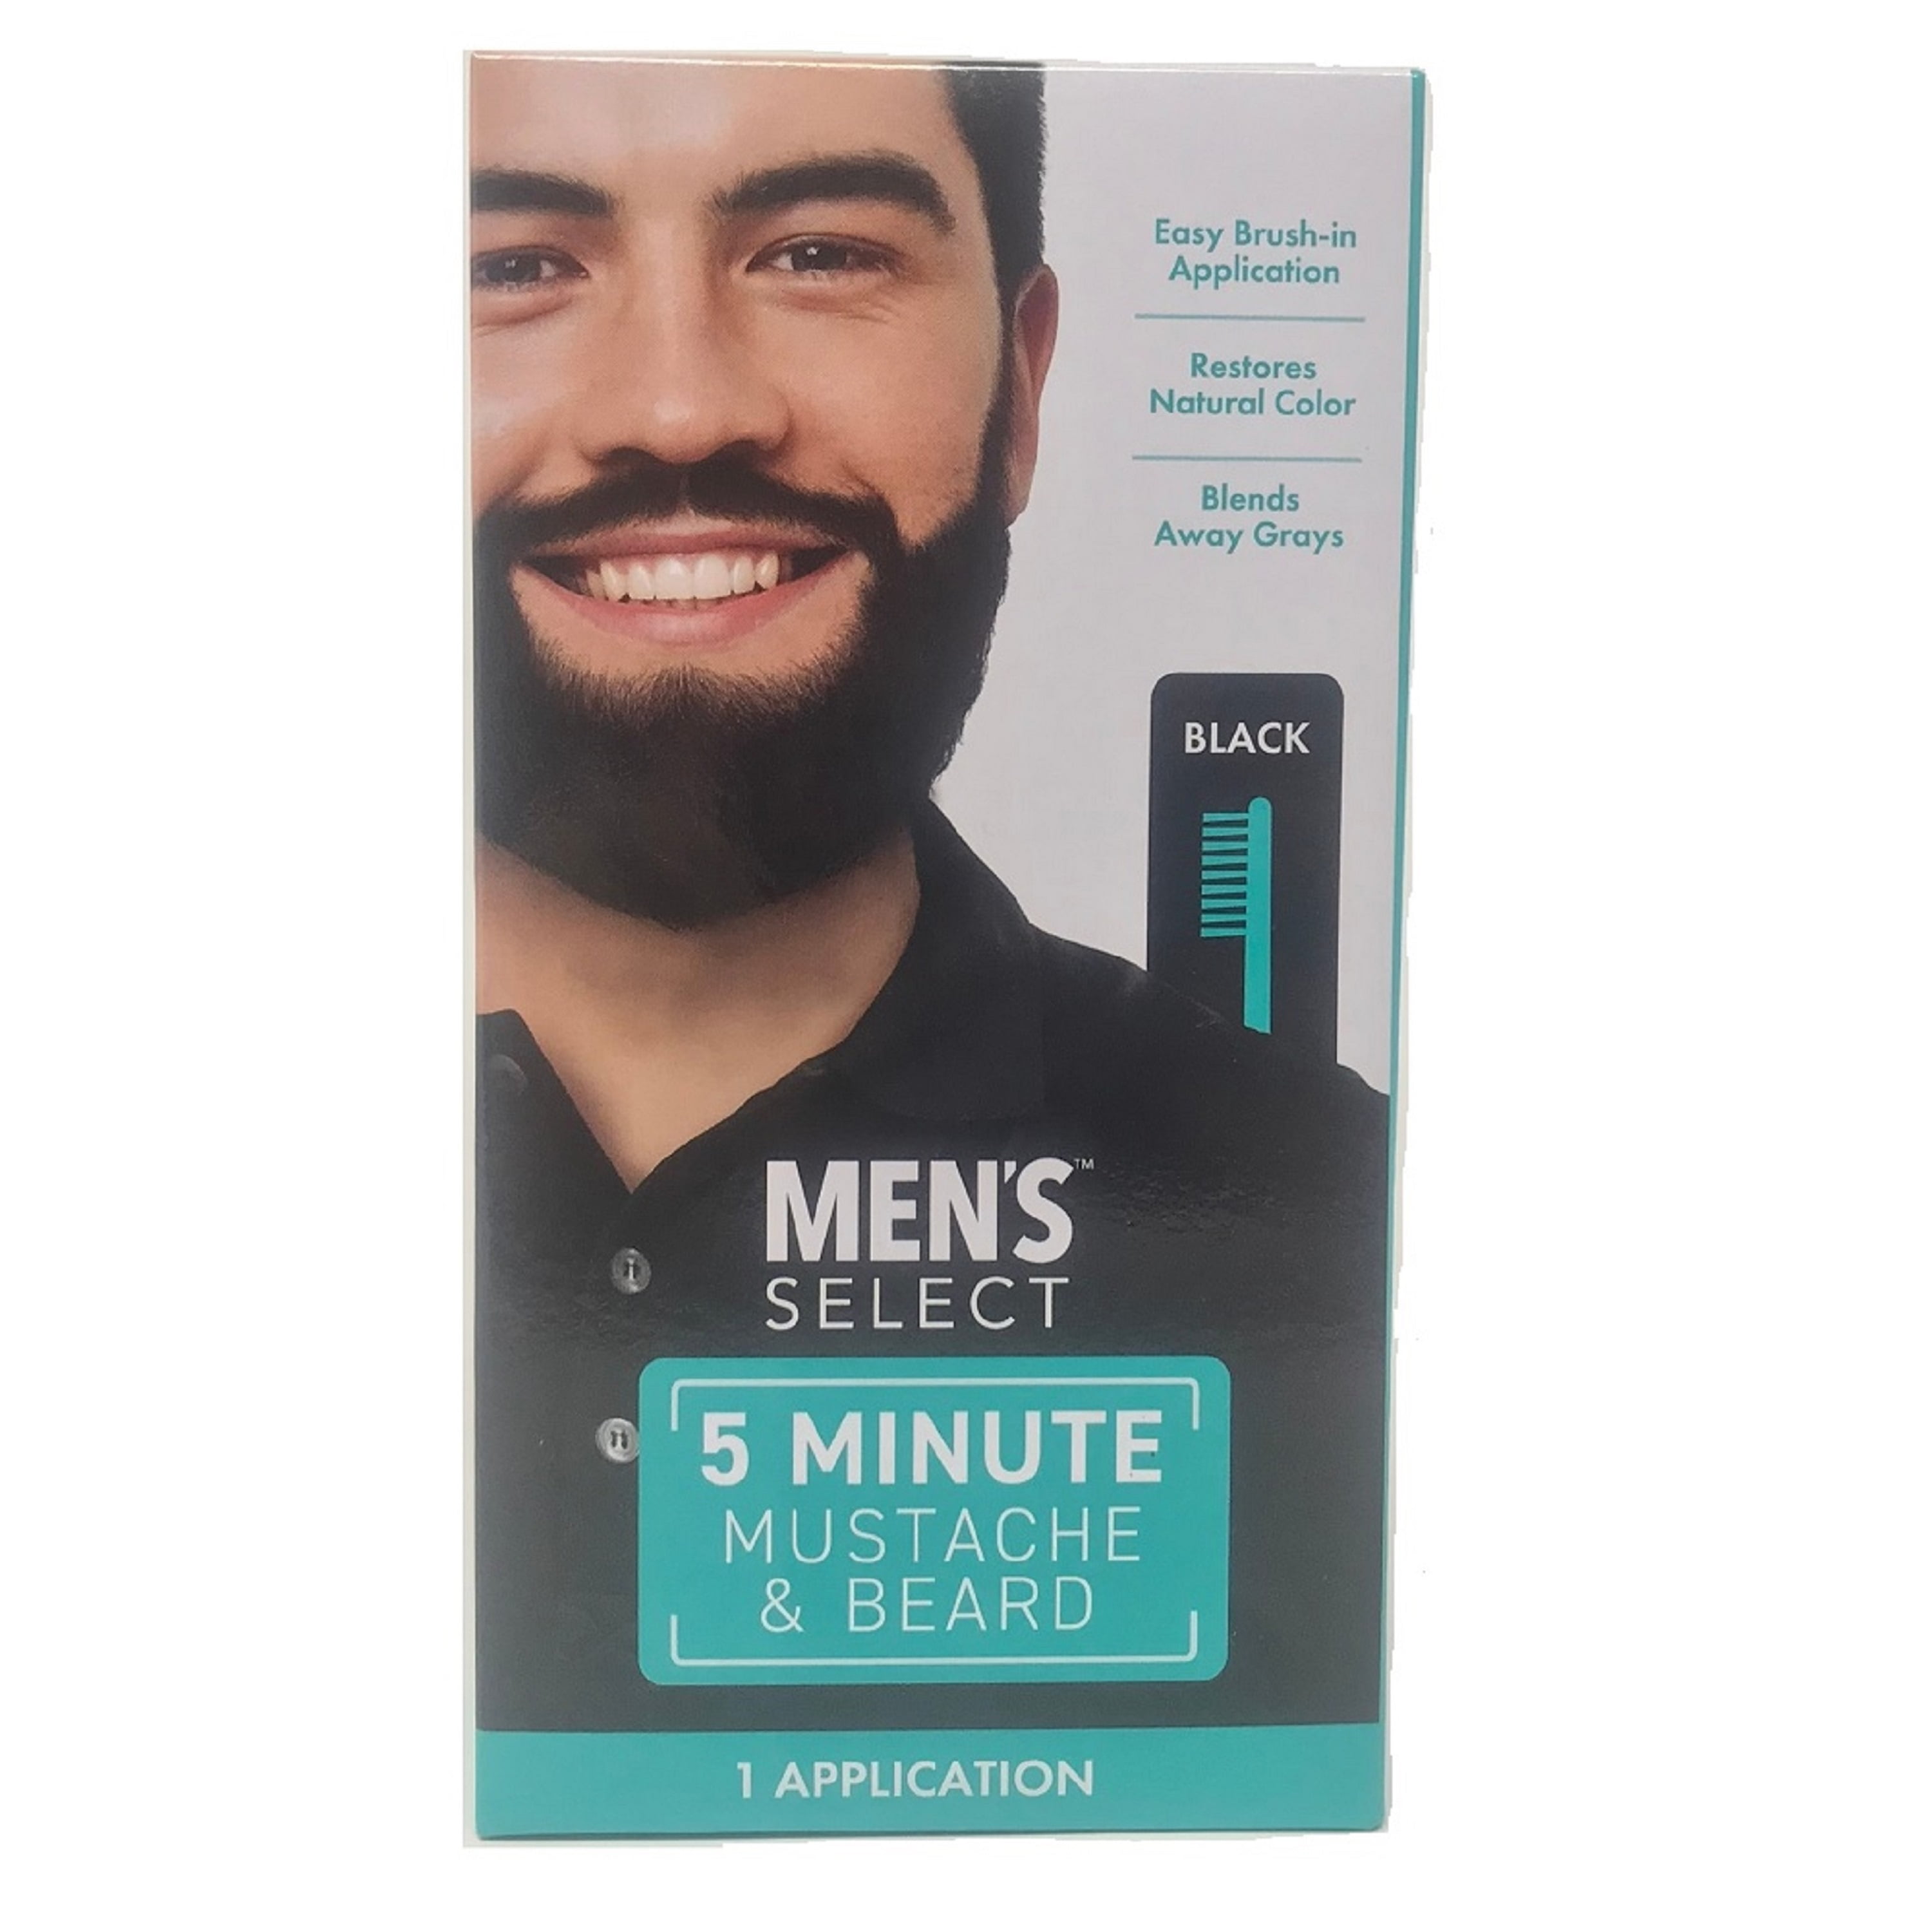 Men's Select Mustache and Beard Hair Color Dye 5 Minute Black or Brown 2pk  